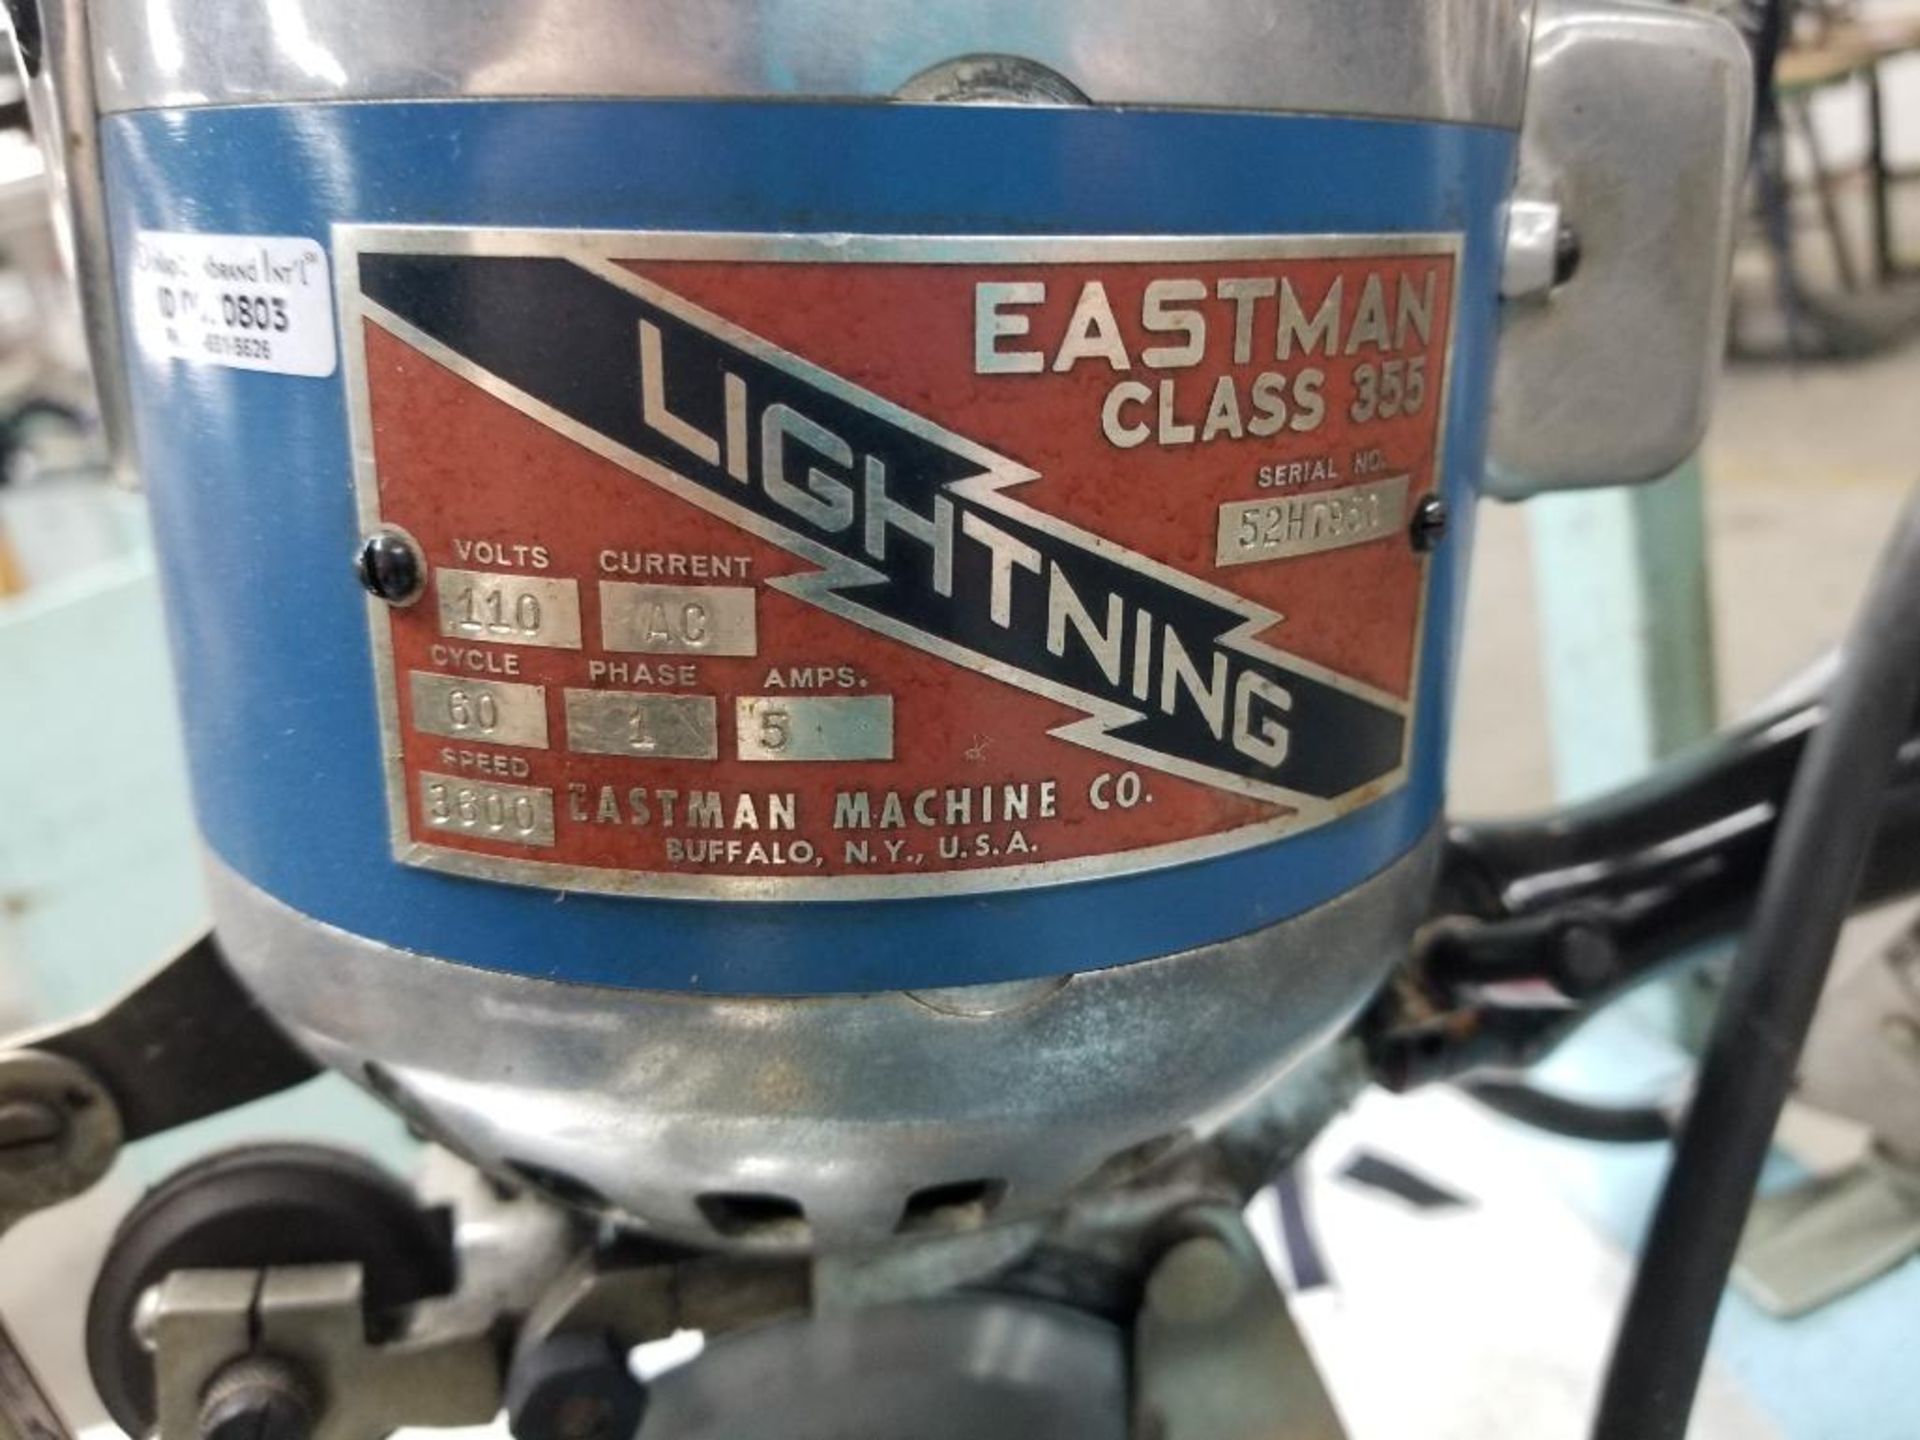 Eastman belt cutting machine. Model 355. Serial #52H7950. Single phase, 115v. - Image 3 of 3